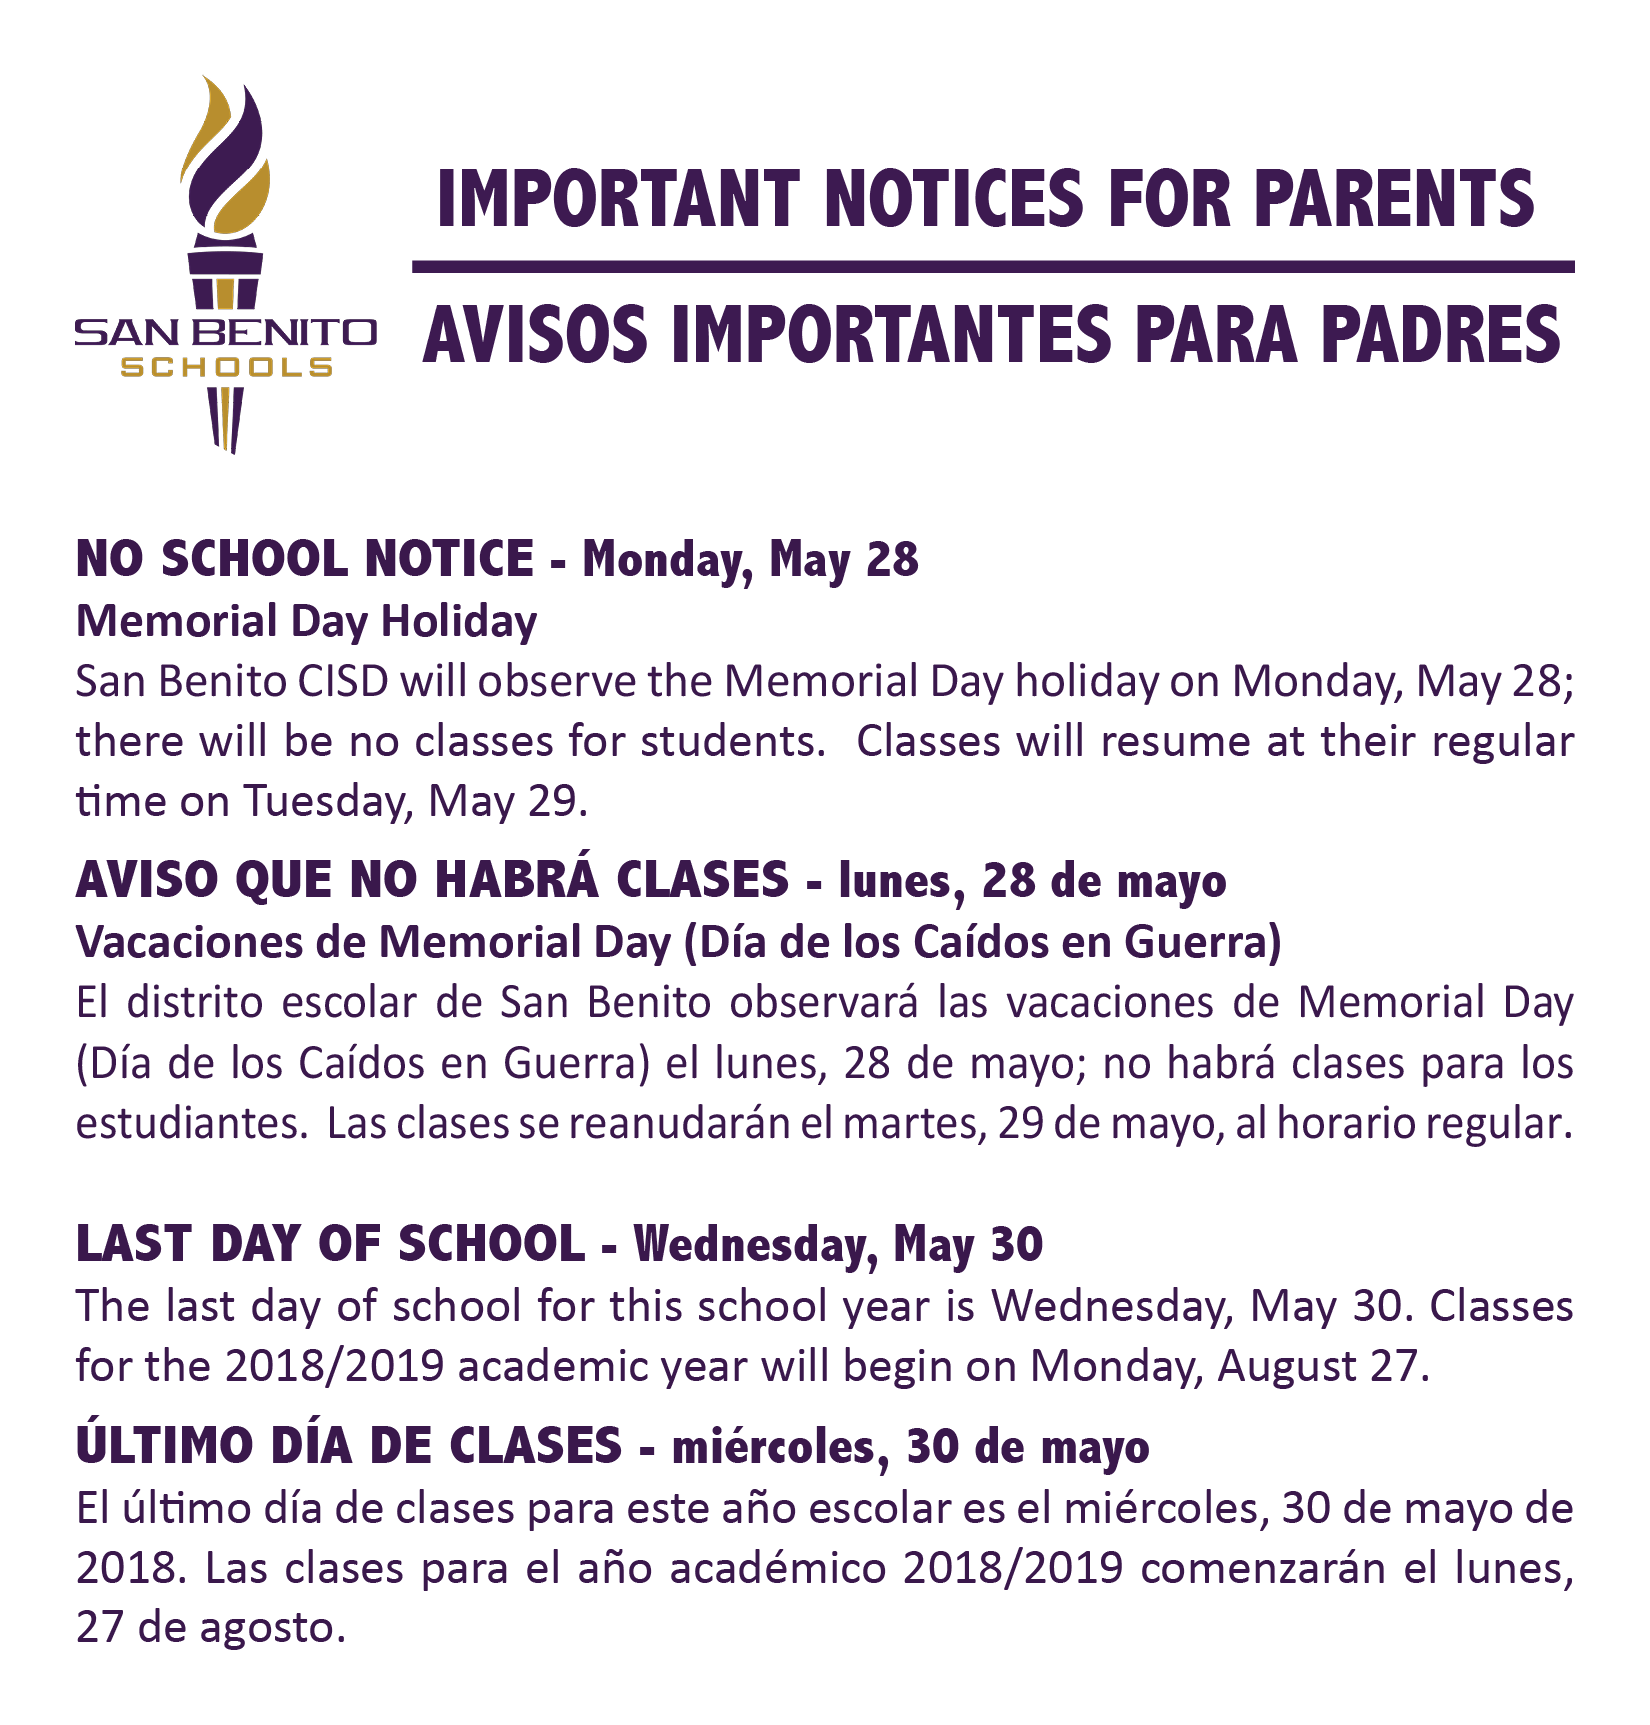 Important notices for parents